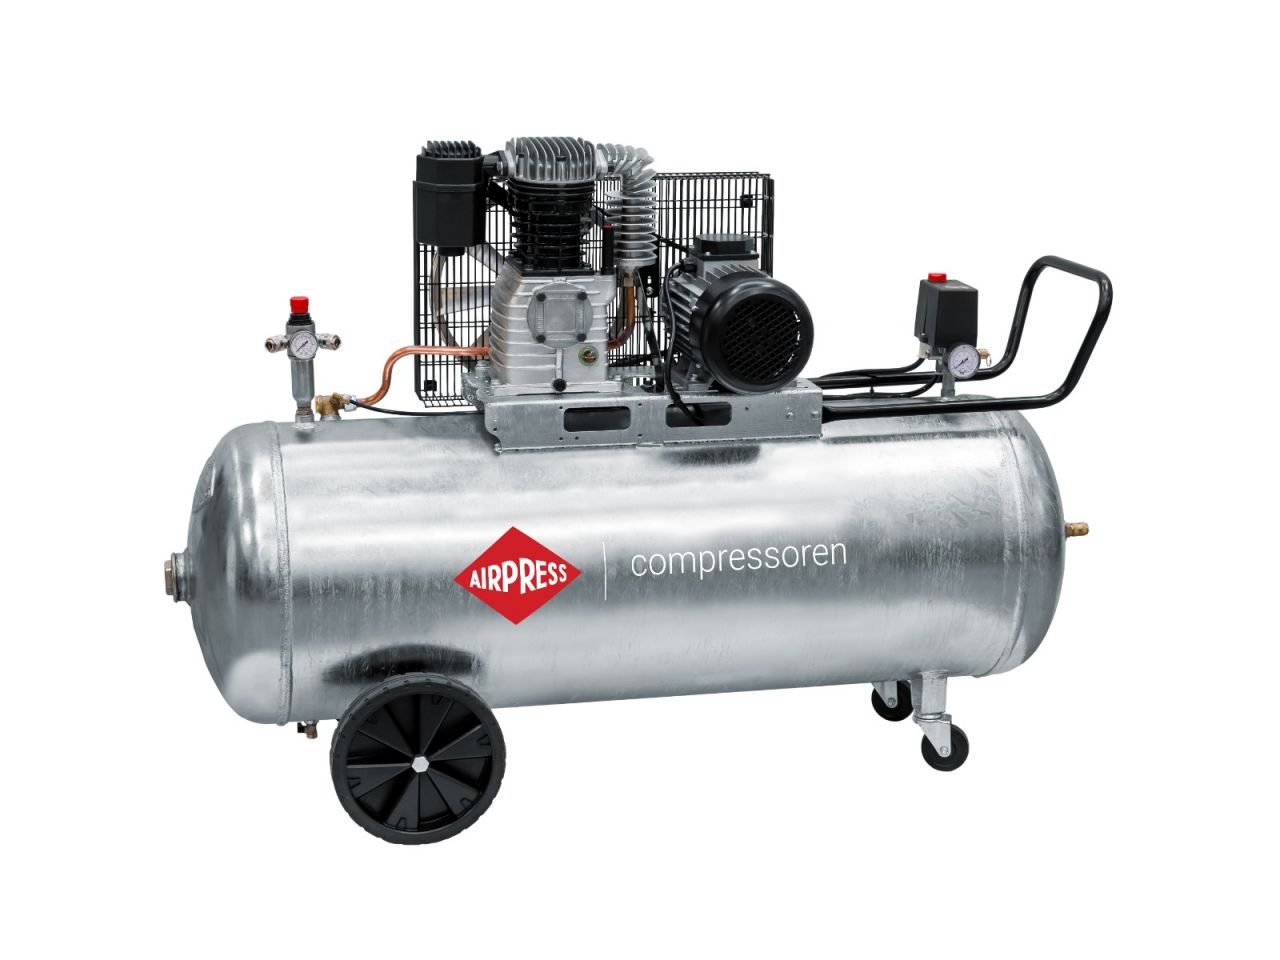 Compresor de aire de una etapa profesional G 600-200 PRO